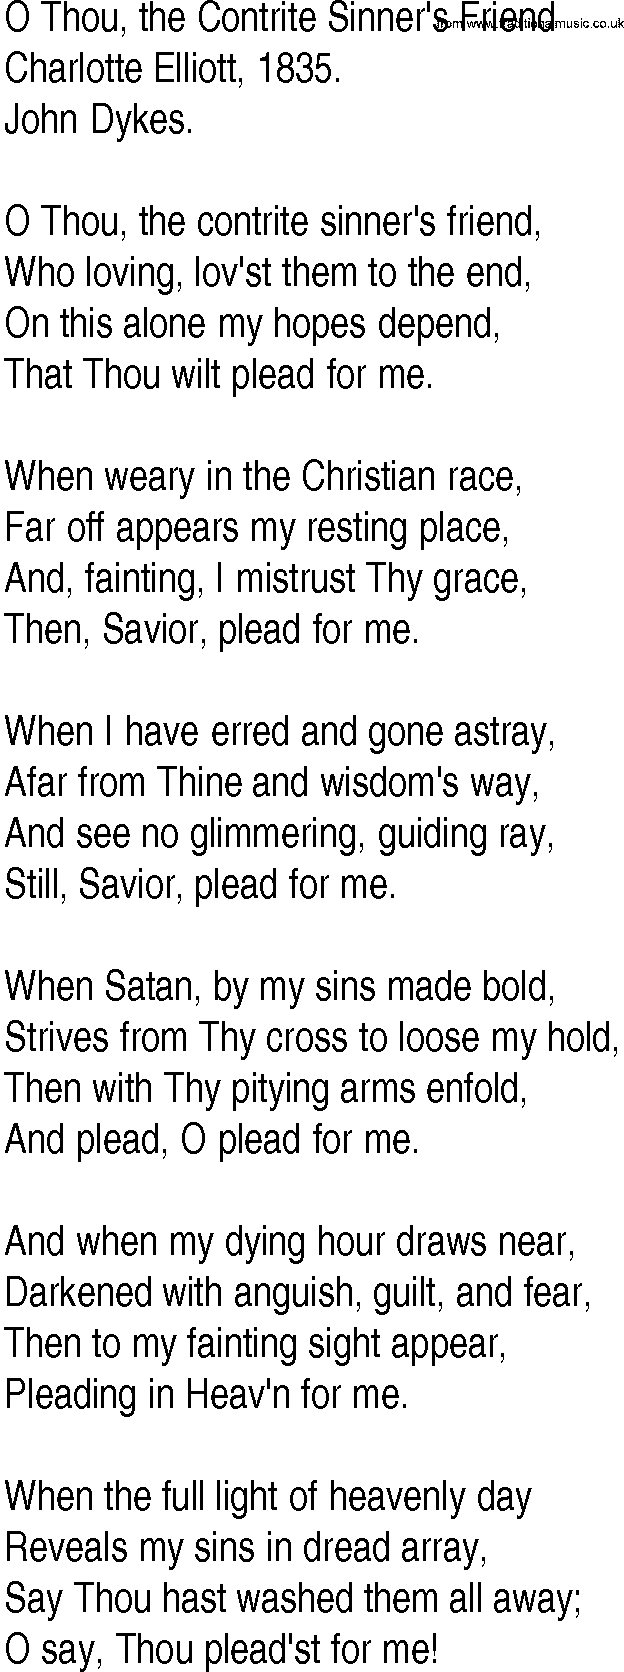 Hymn and Gospel Song: O Thou, the Contrite Sinner's Friend by Charlotte Elliott lyrics